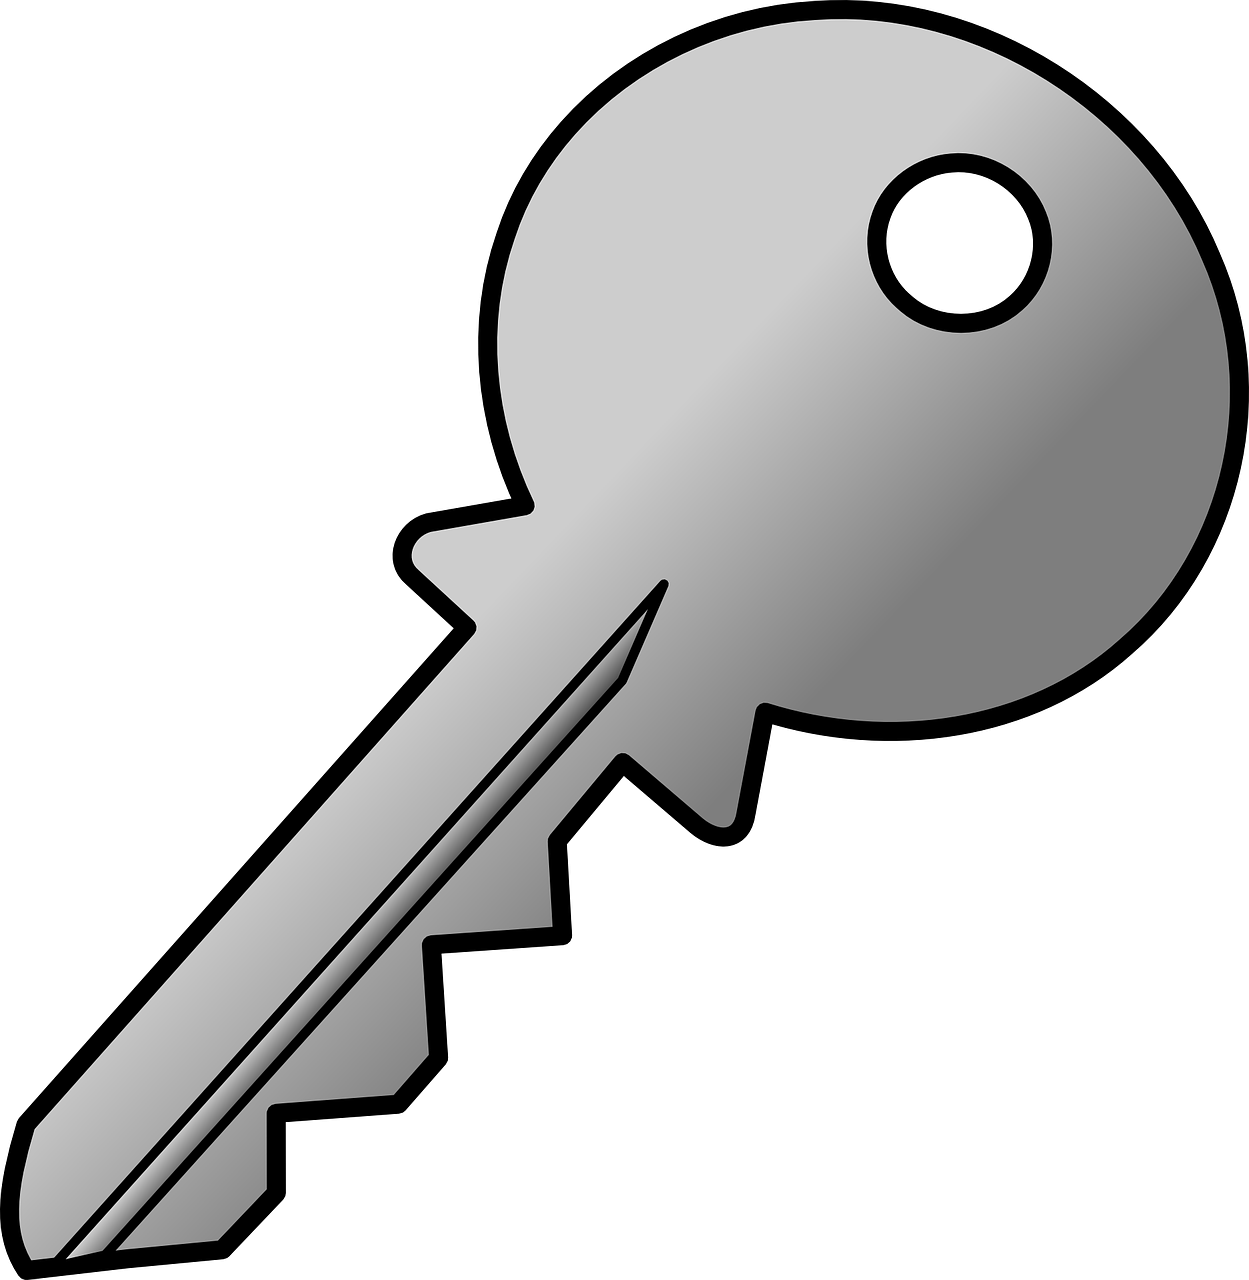 Покажи картинку ключ. Ключ. Изображение ключа. Ключ нарисованный. Ключ вектор.